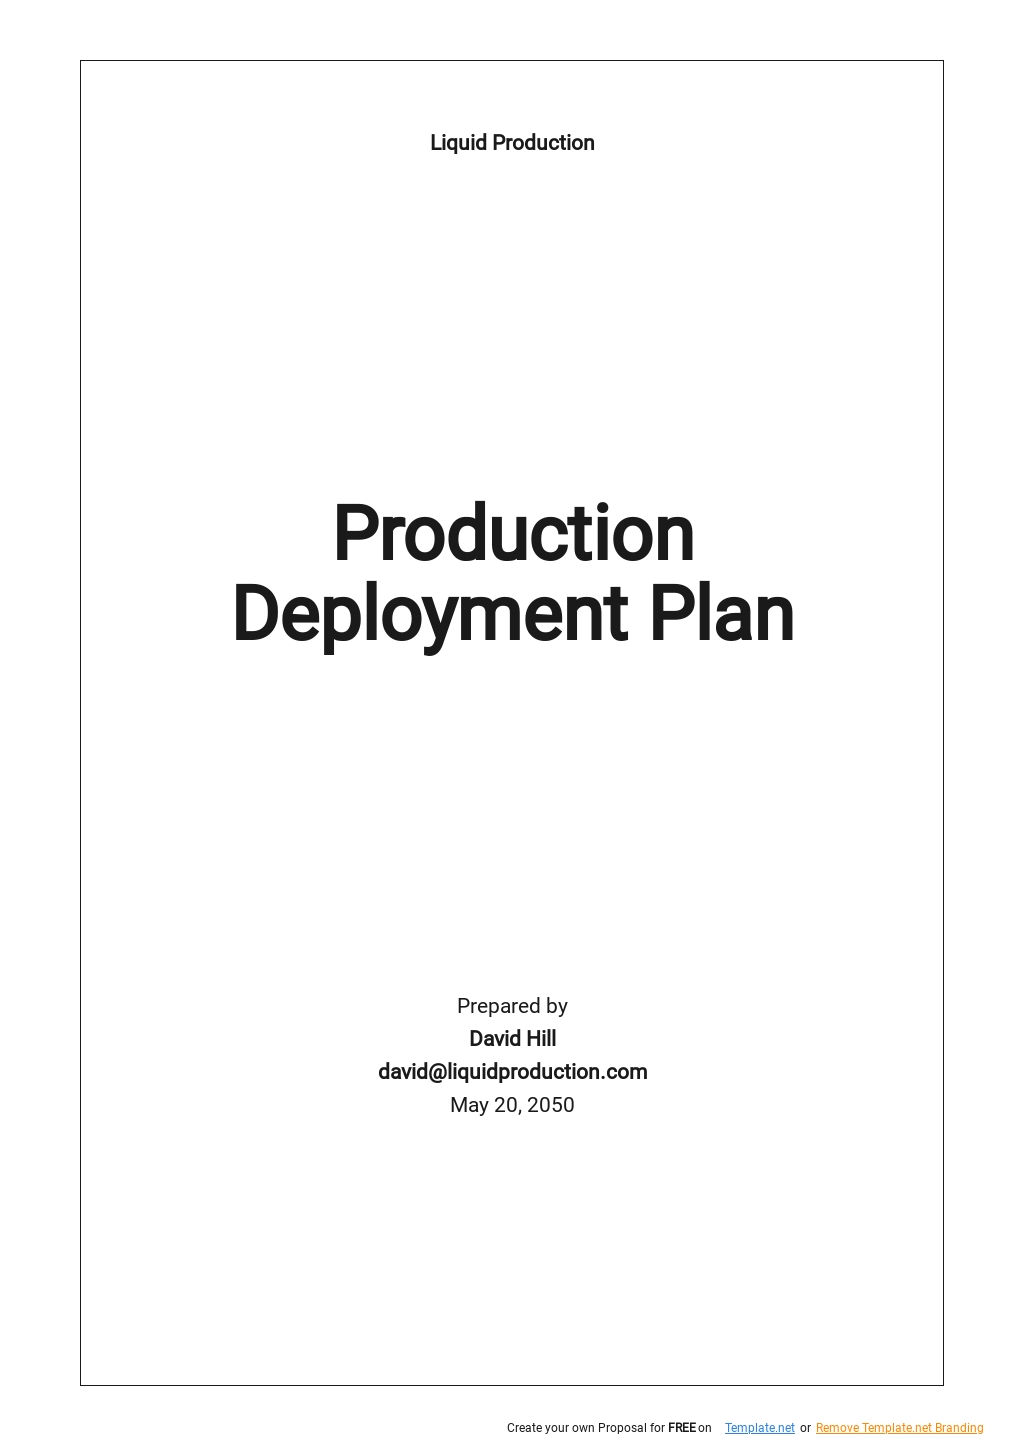 Production Deployment Plan Template